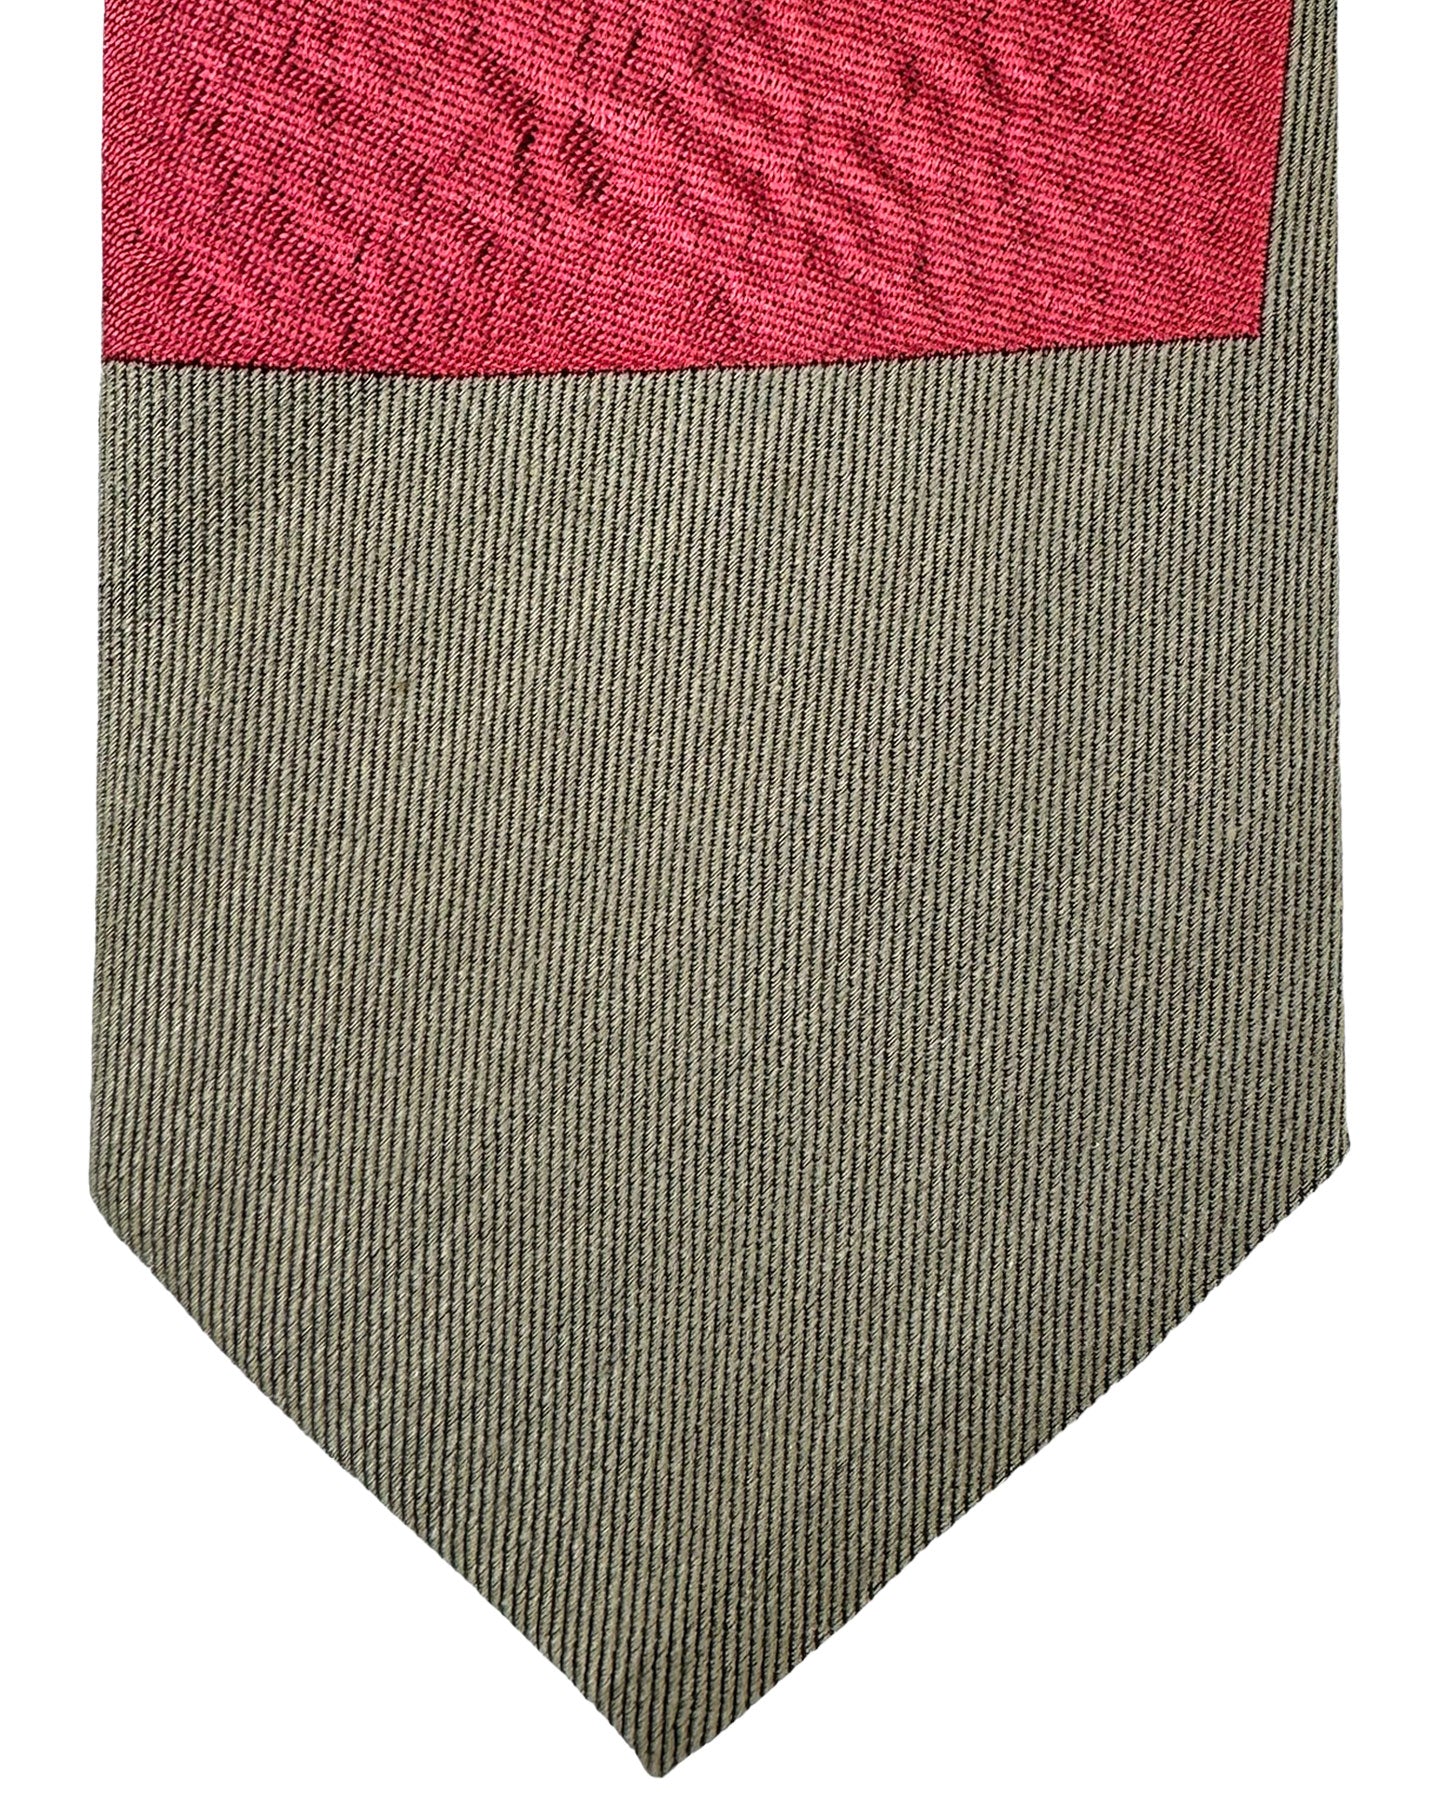 Gene Meyer Tie Brown Pink Design - Hand Made in Italy 